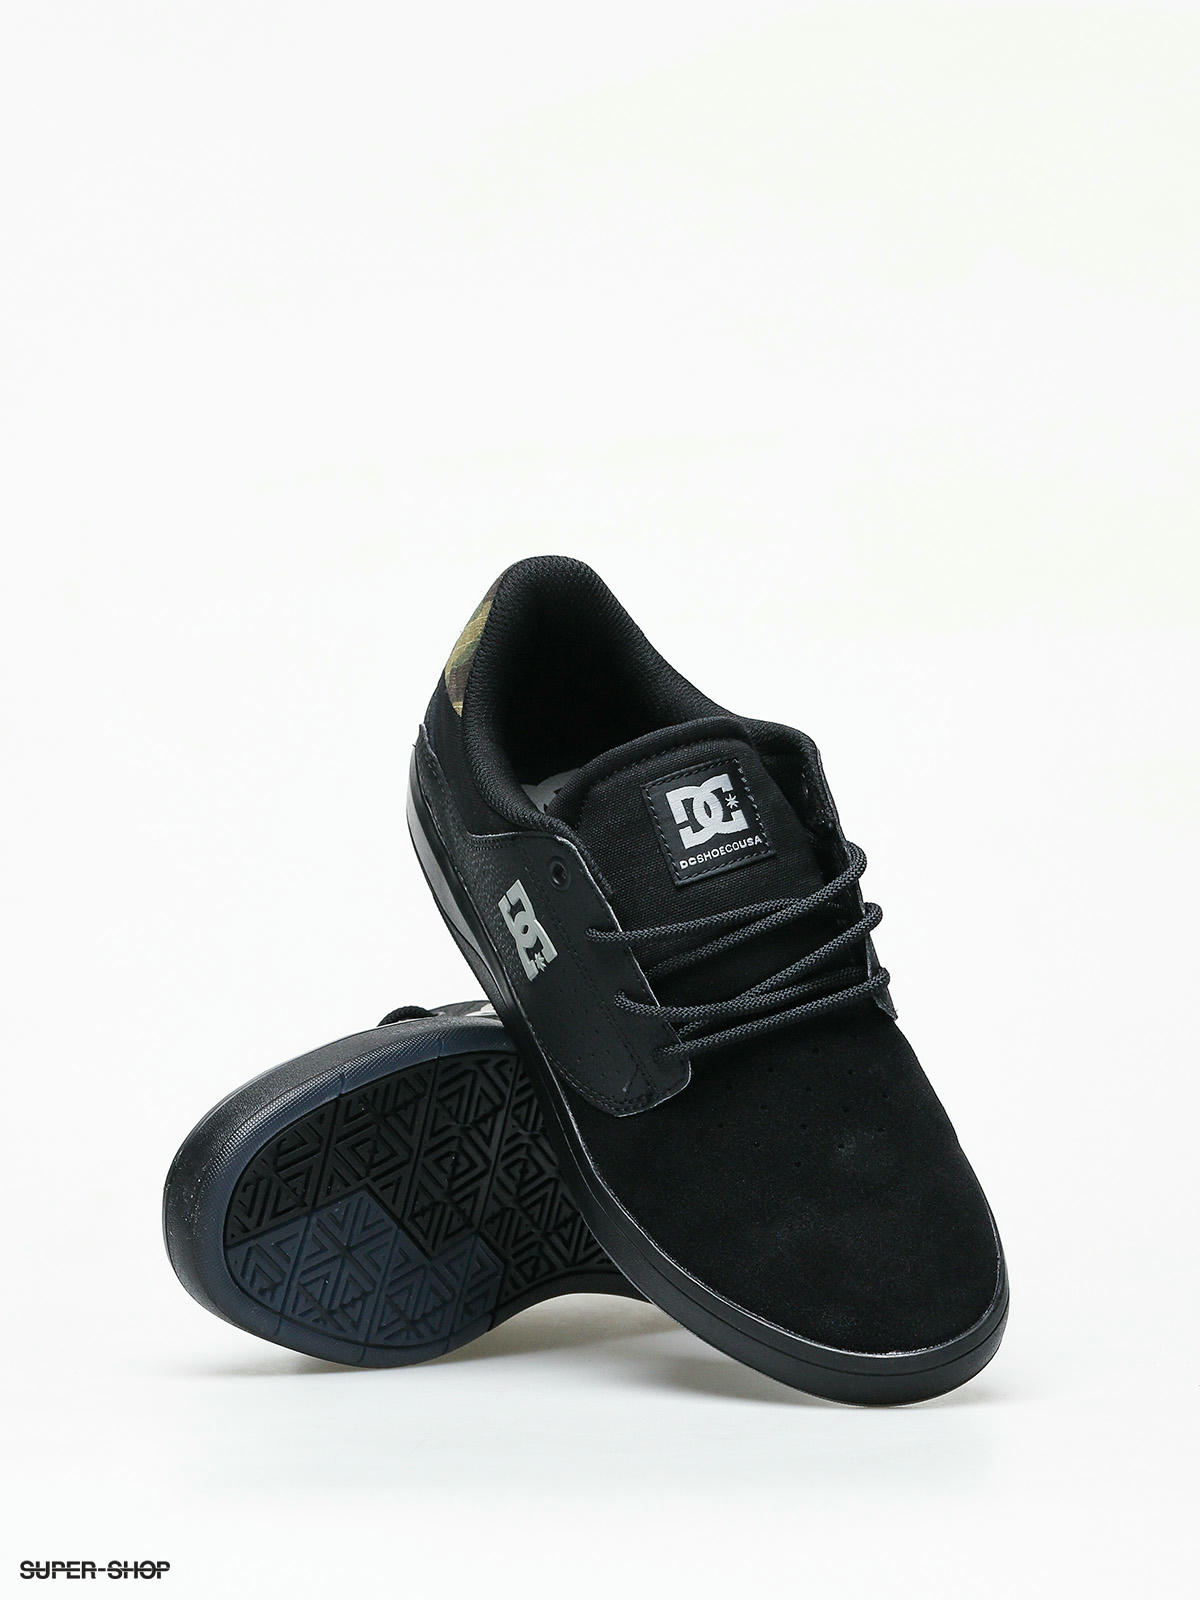 DC Plaza Tc Se Shoes (black camo)